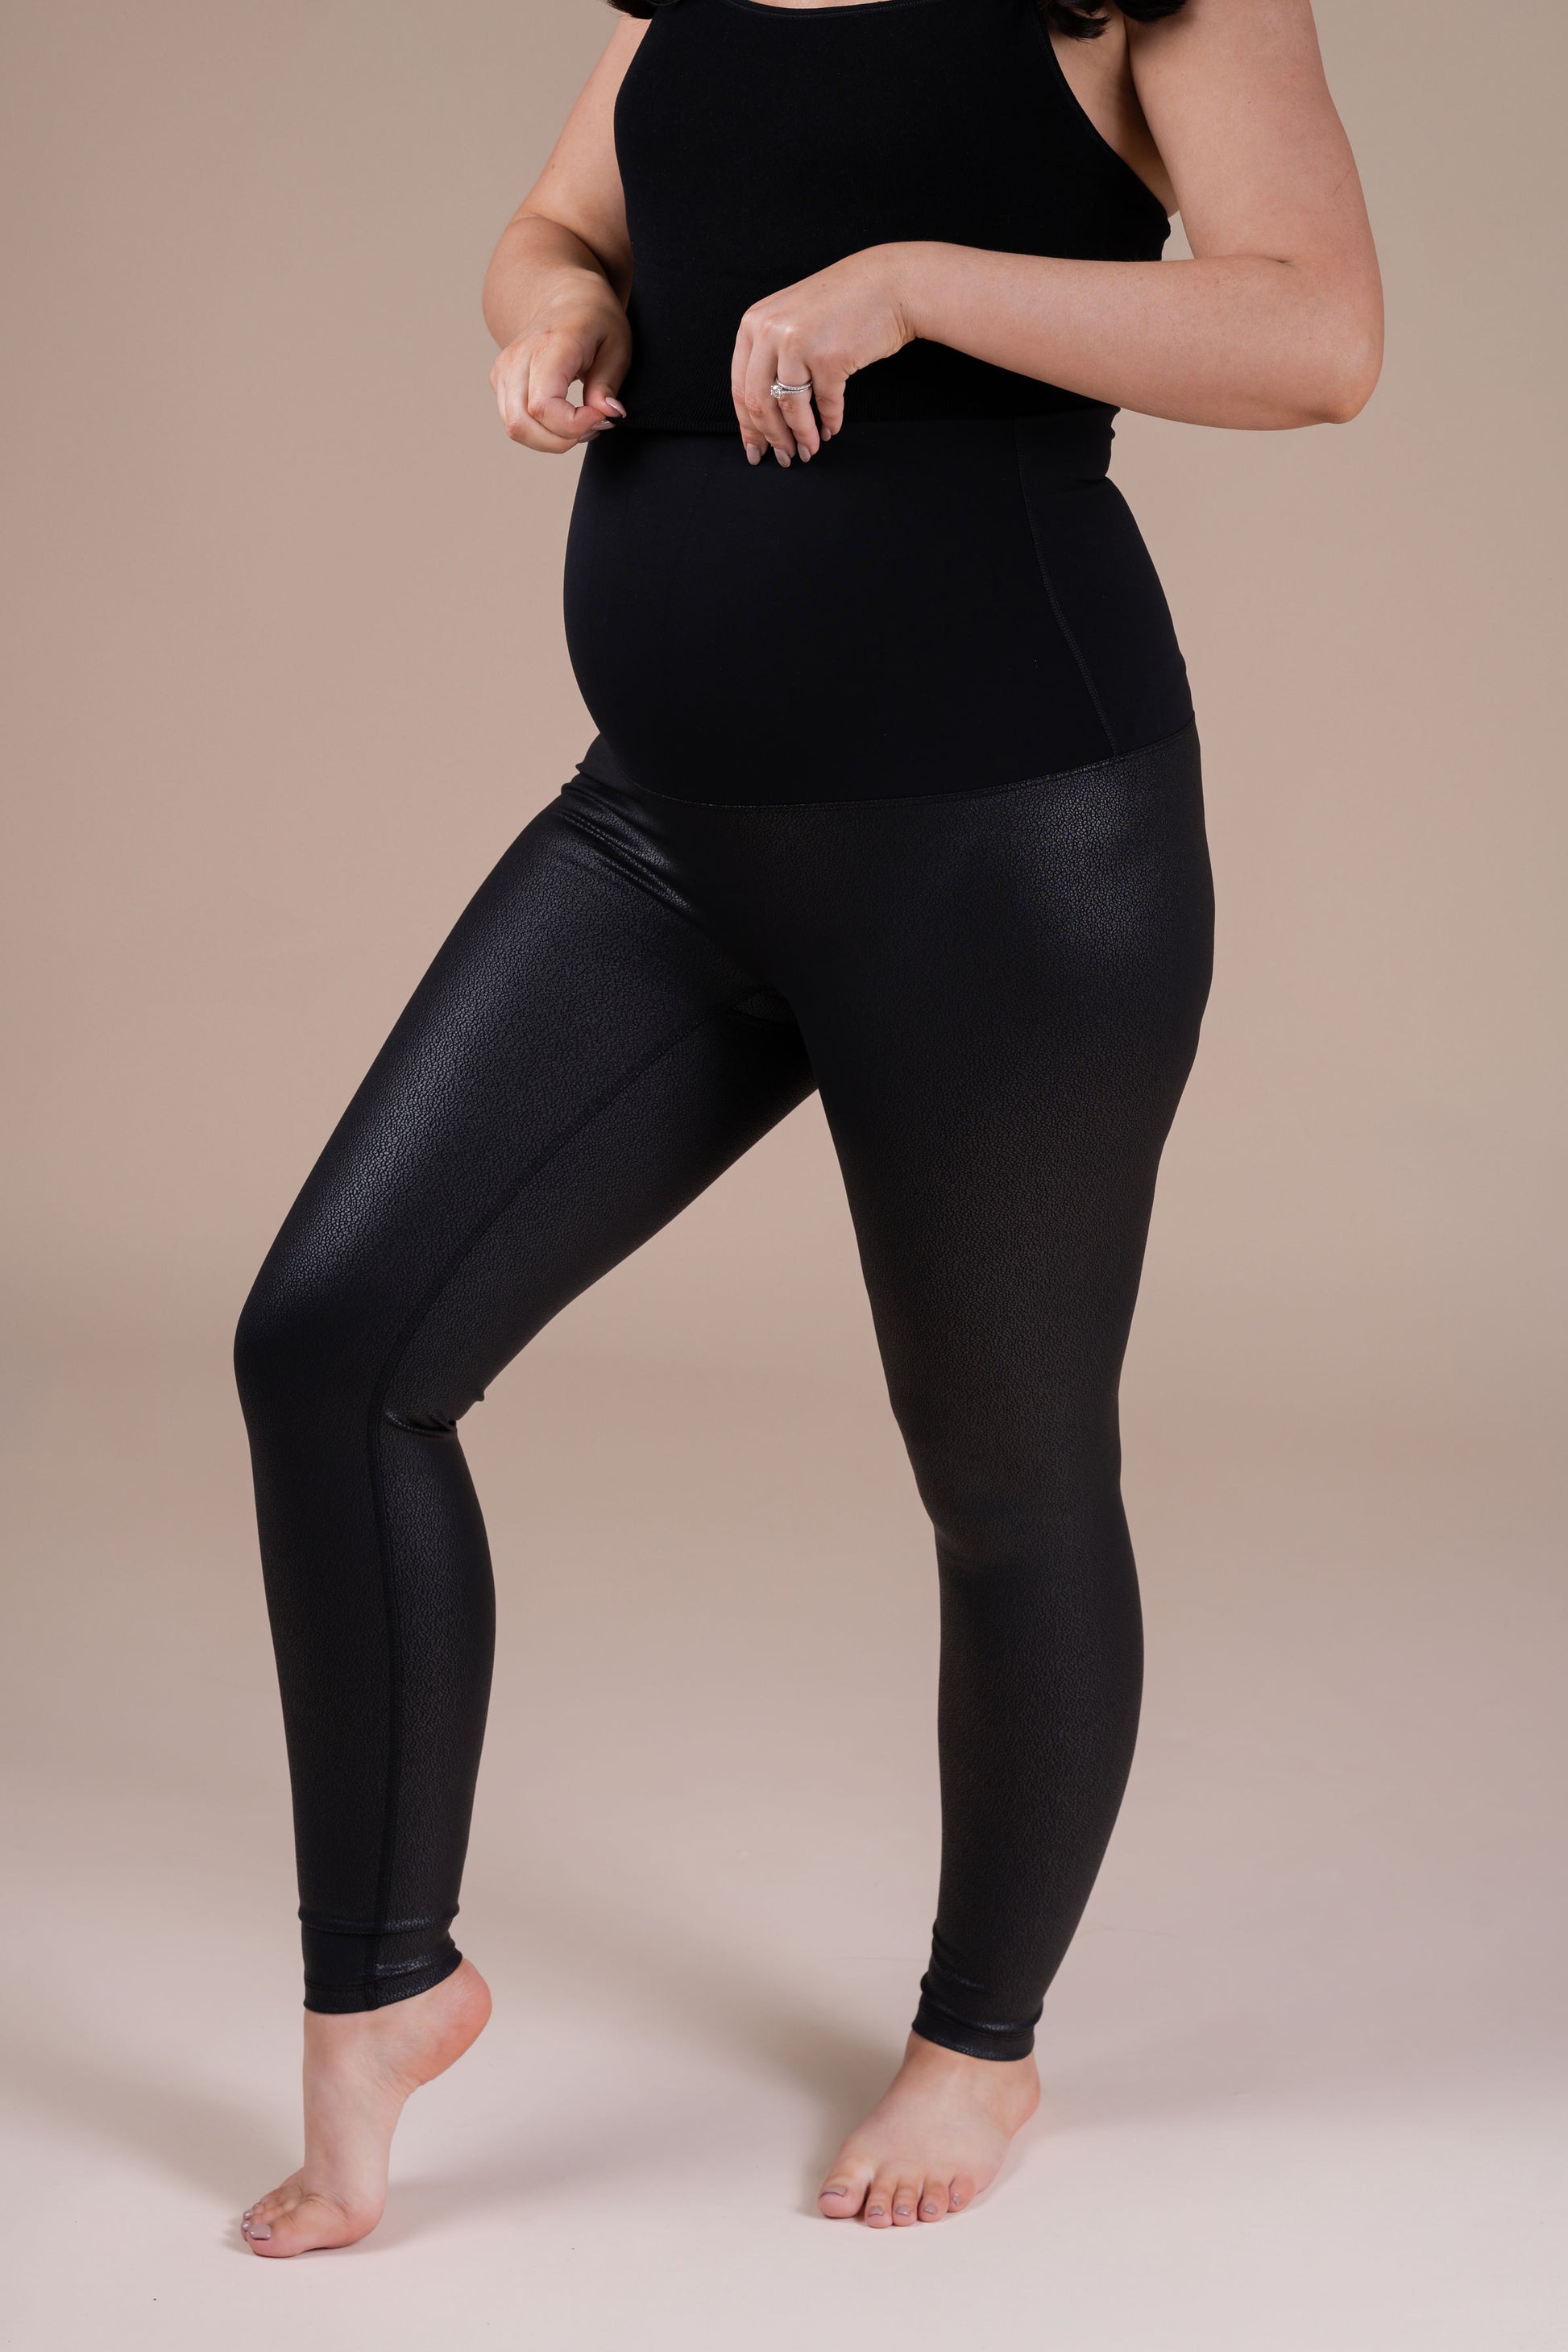 Mama Licious Mamalicious Maternity cotton 2 pack legging in black and khaki  - ShopStyle